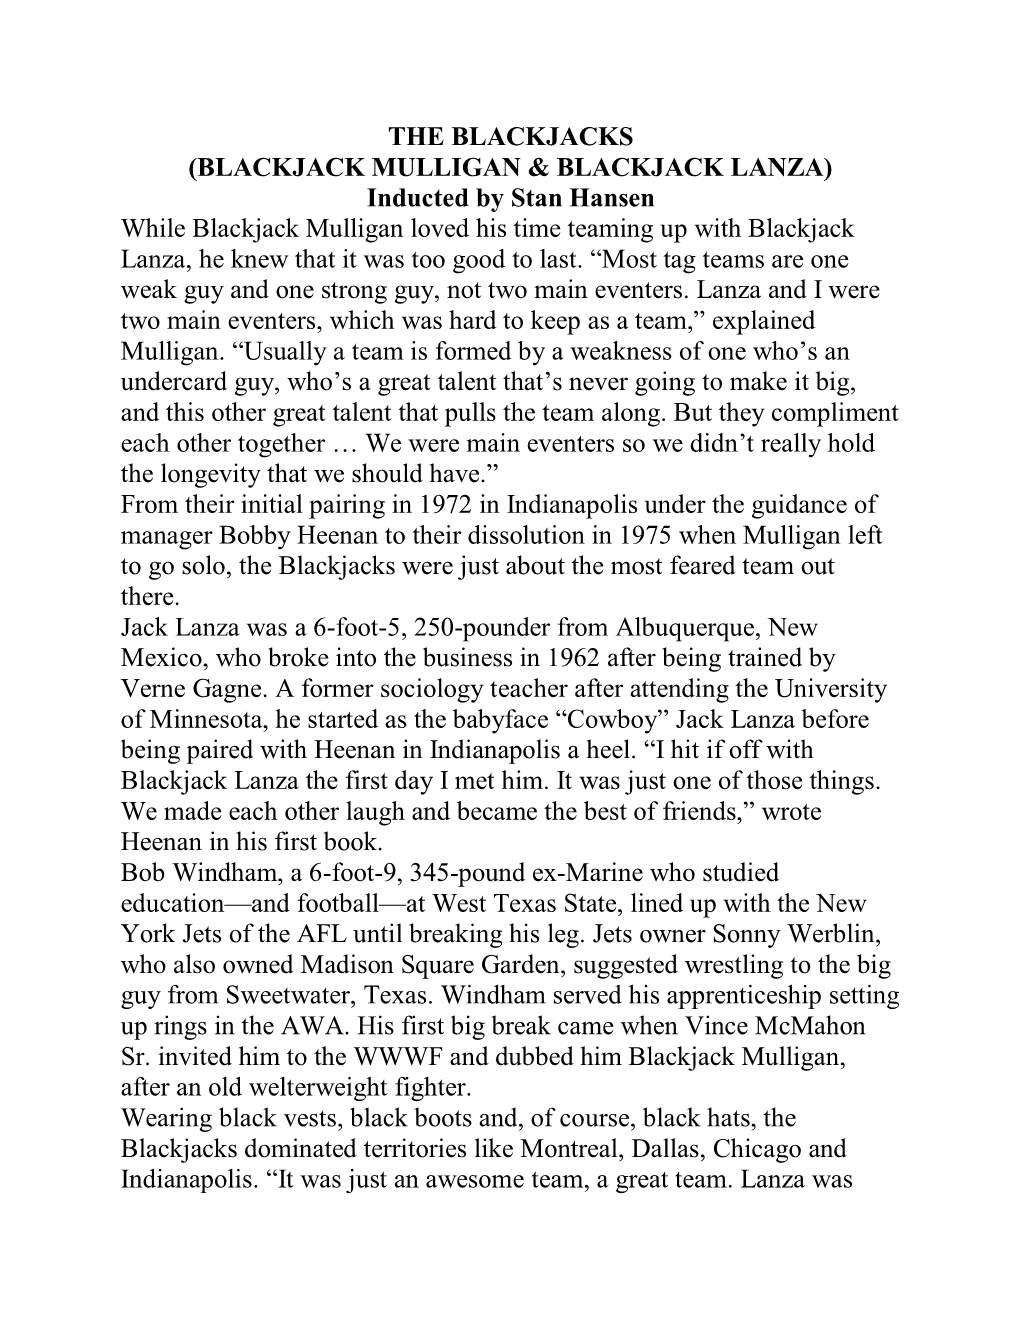 The Blackjacks (Blackjack Mulligan & Blackjack Lanza